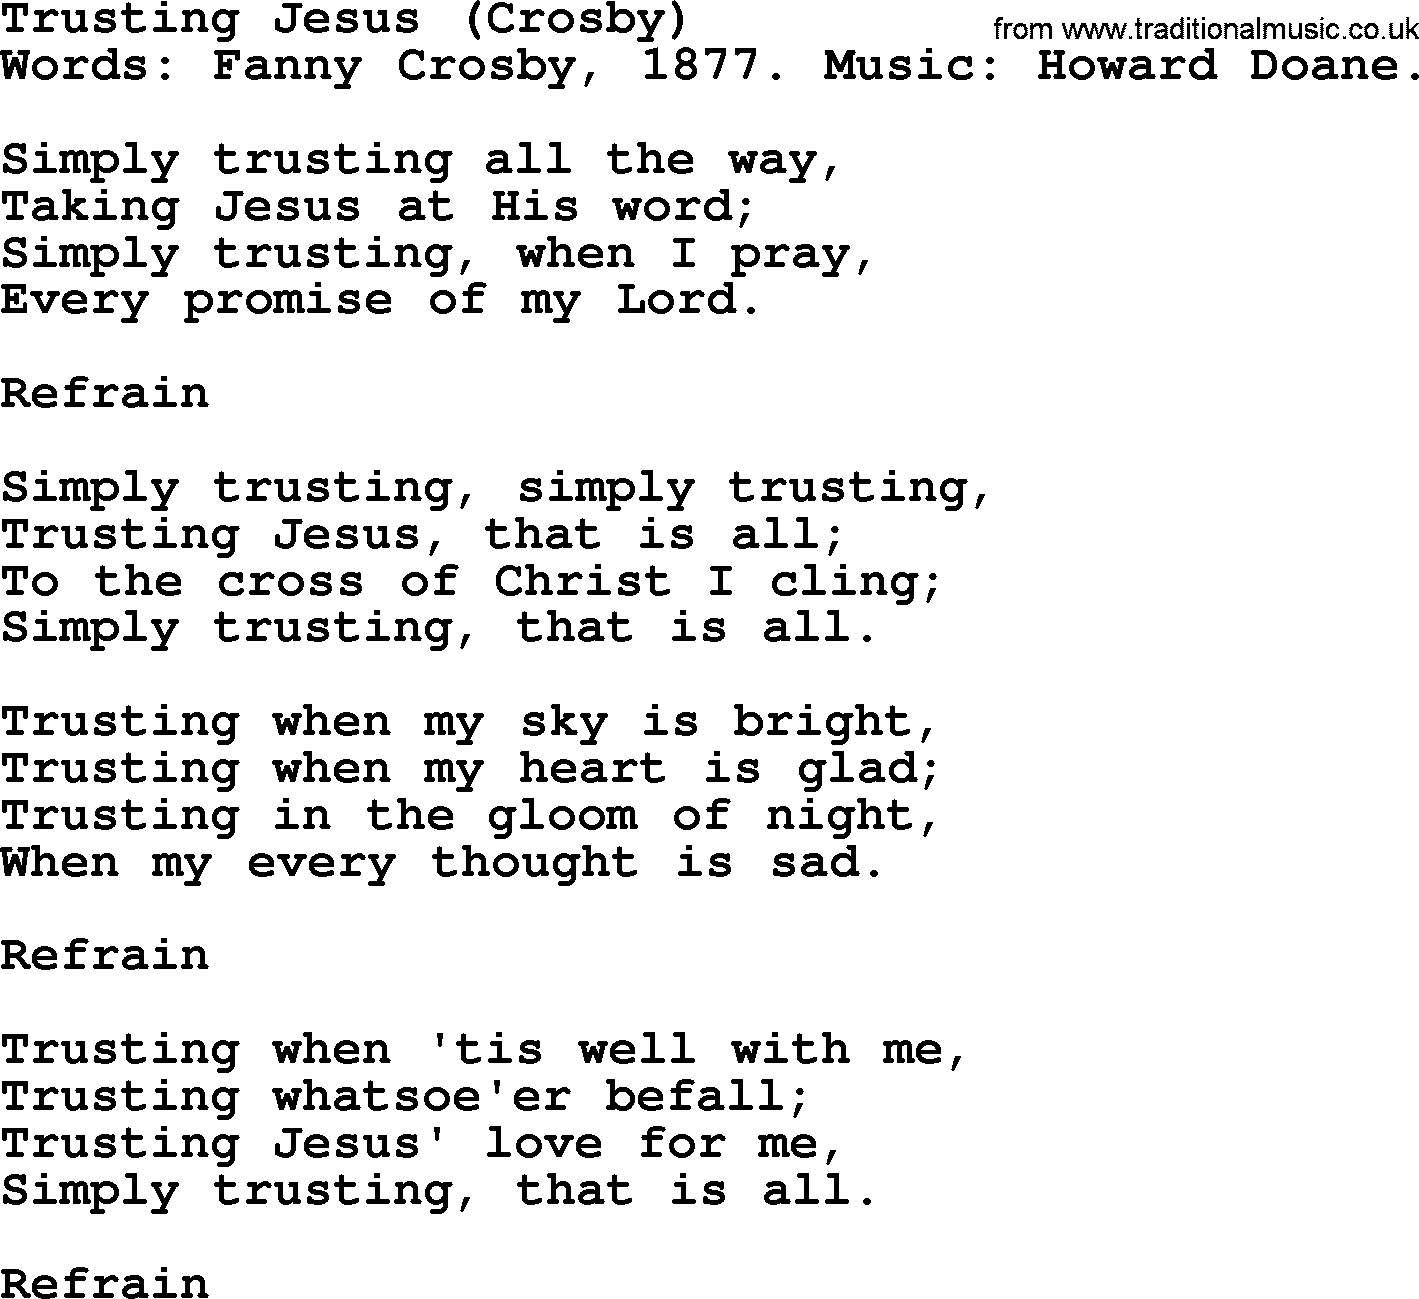 Fanny Crosby song: Trusting Jesus, lyrics